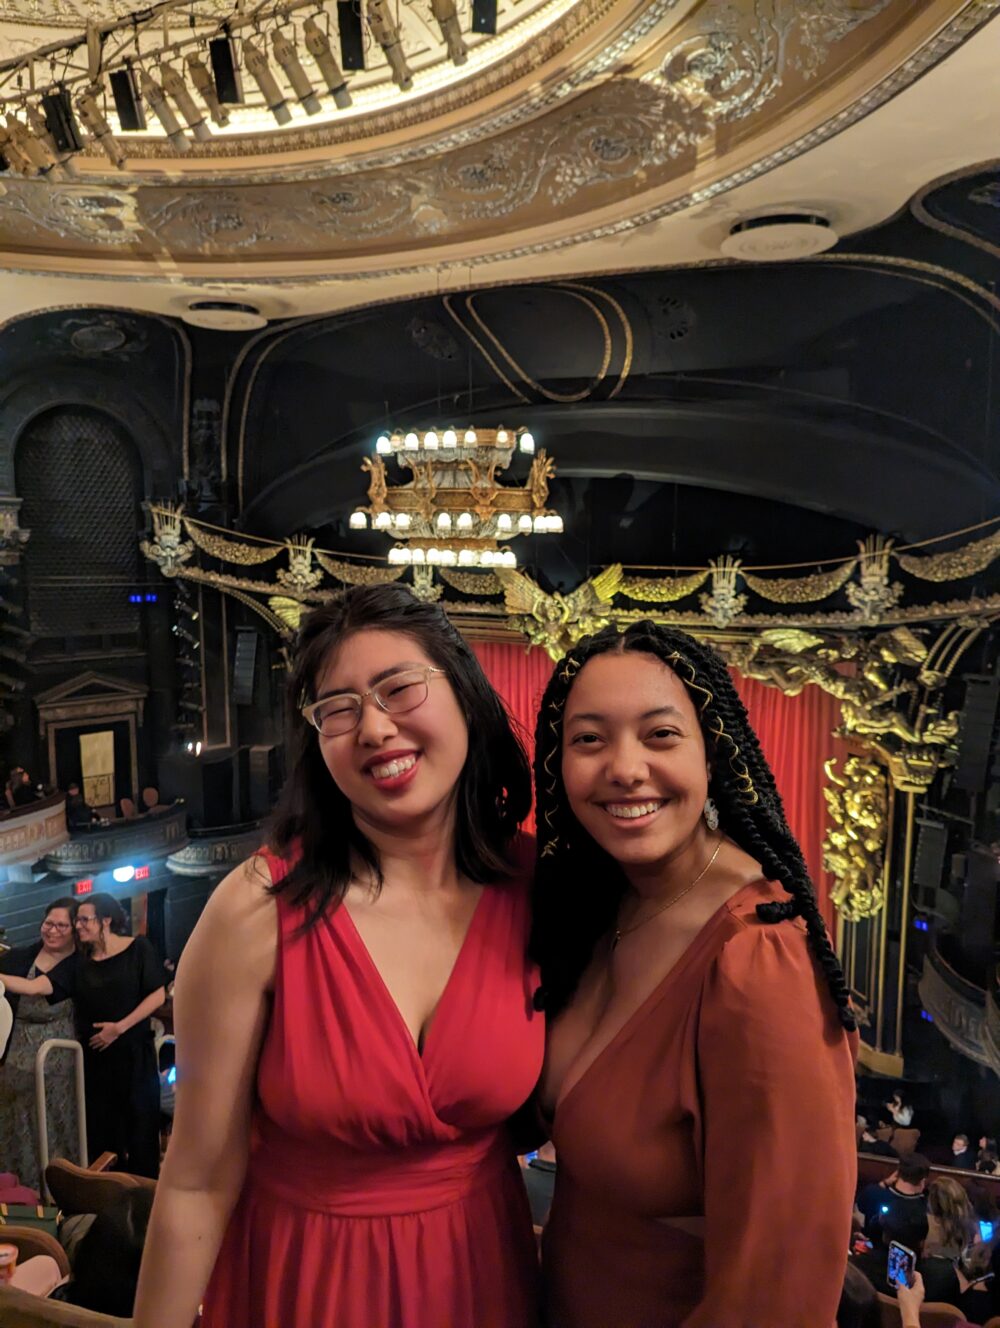 2 women in a theater